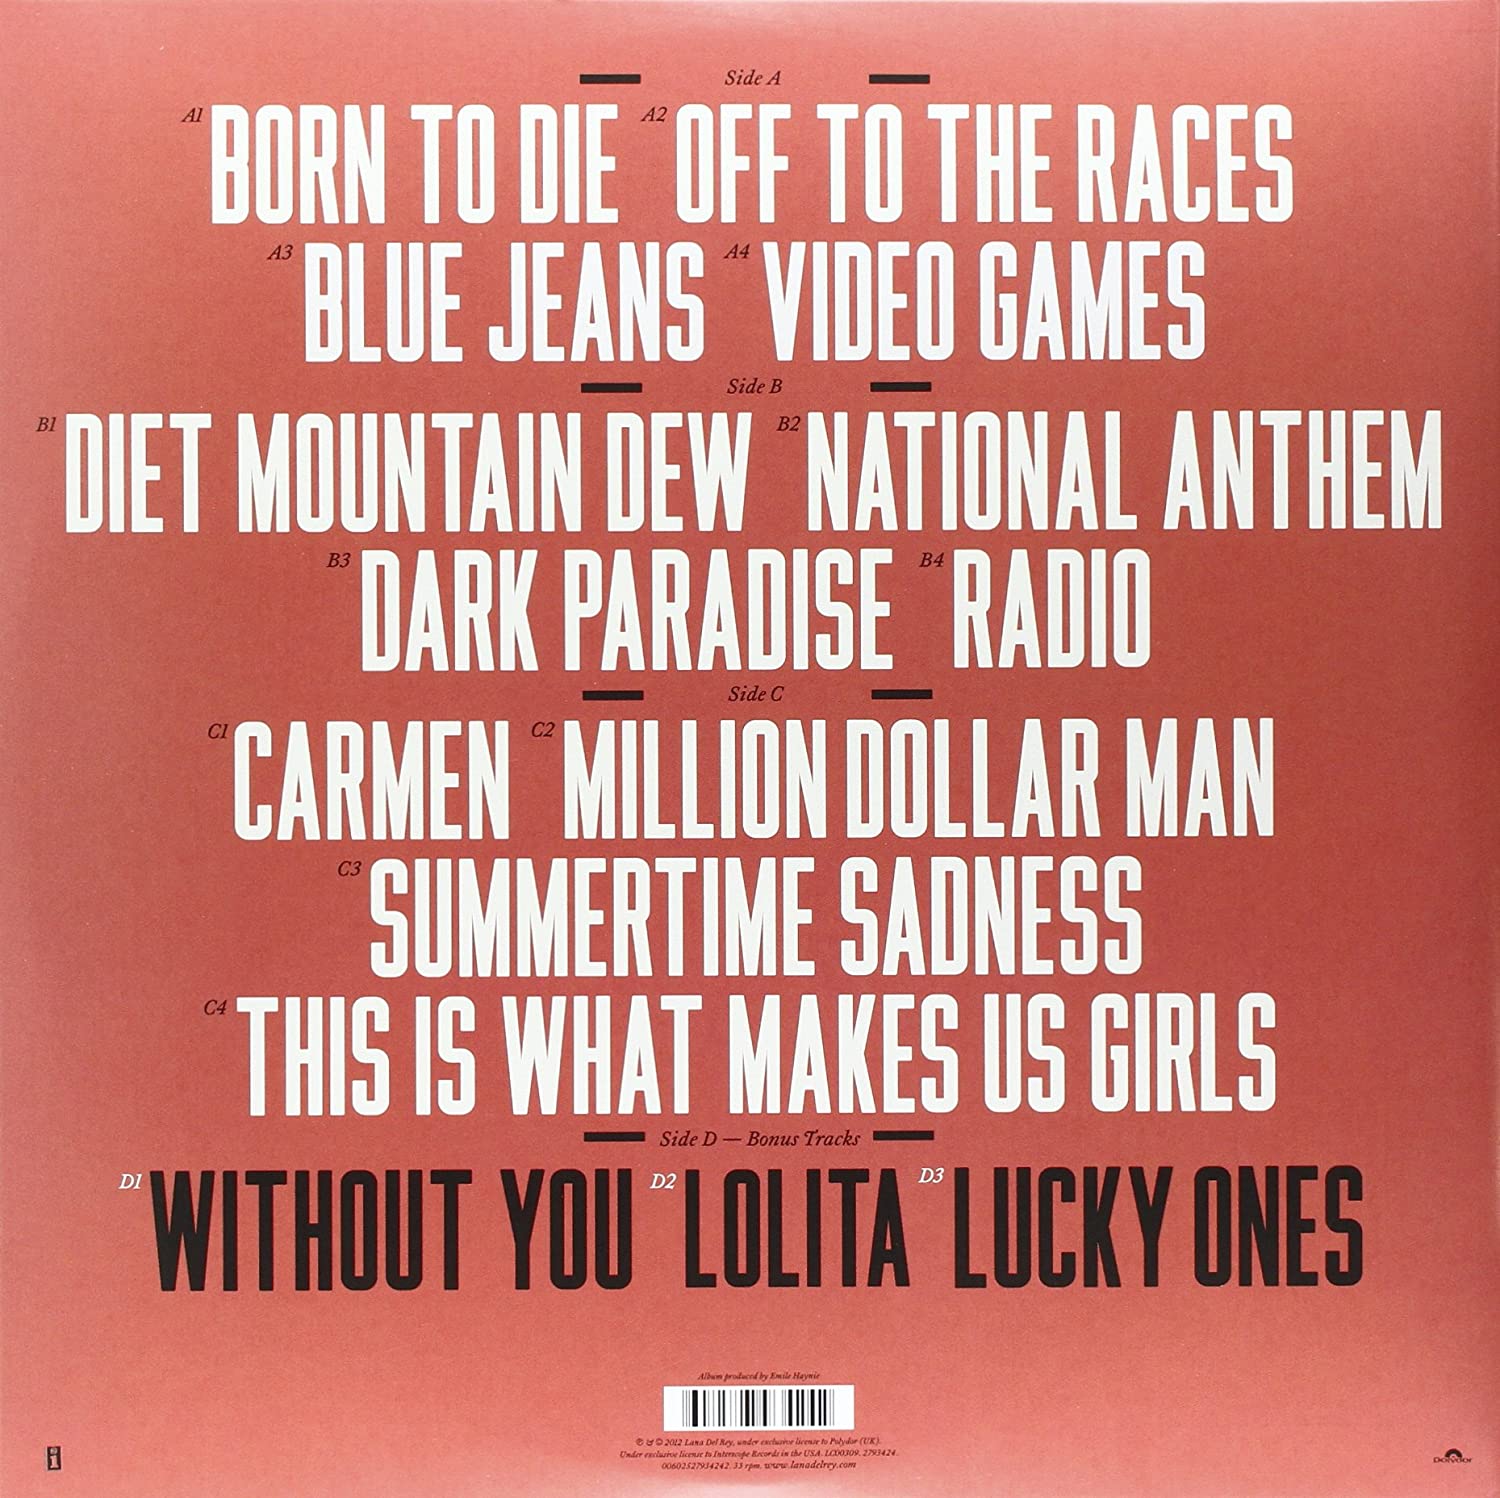 Born To Die - Vinyl | Lana Del Rey